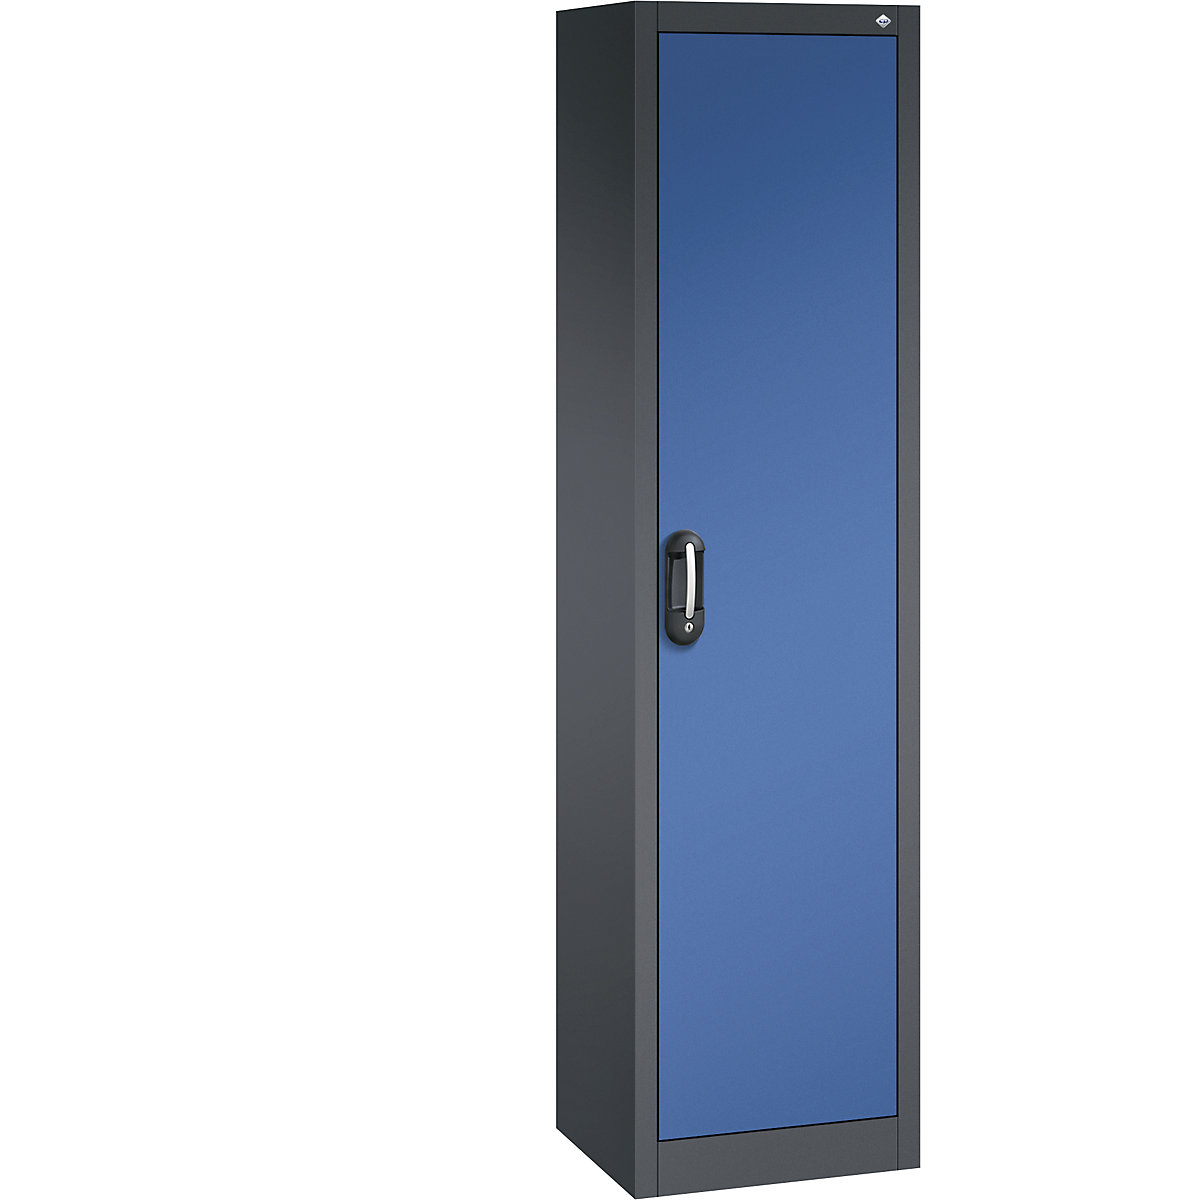 Univerzální skříň ACURADO – C+P, š x h 500 x 400 mm, černošedá / enciánová modrá-22